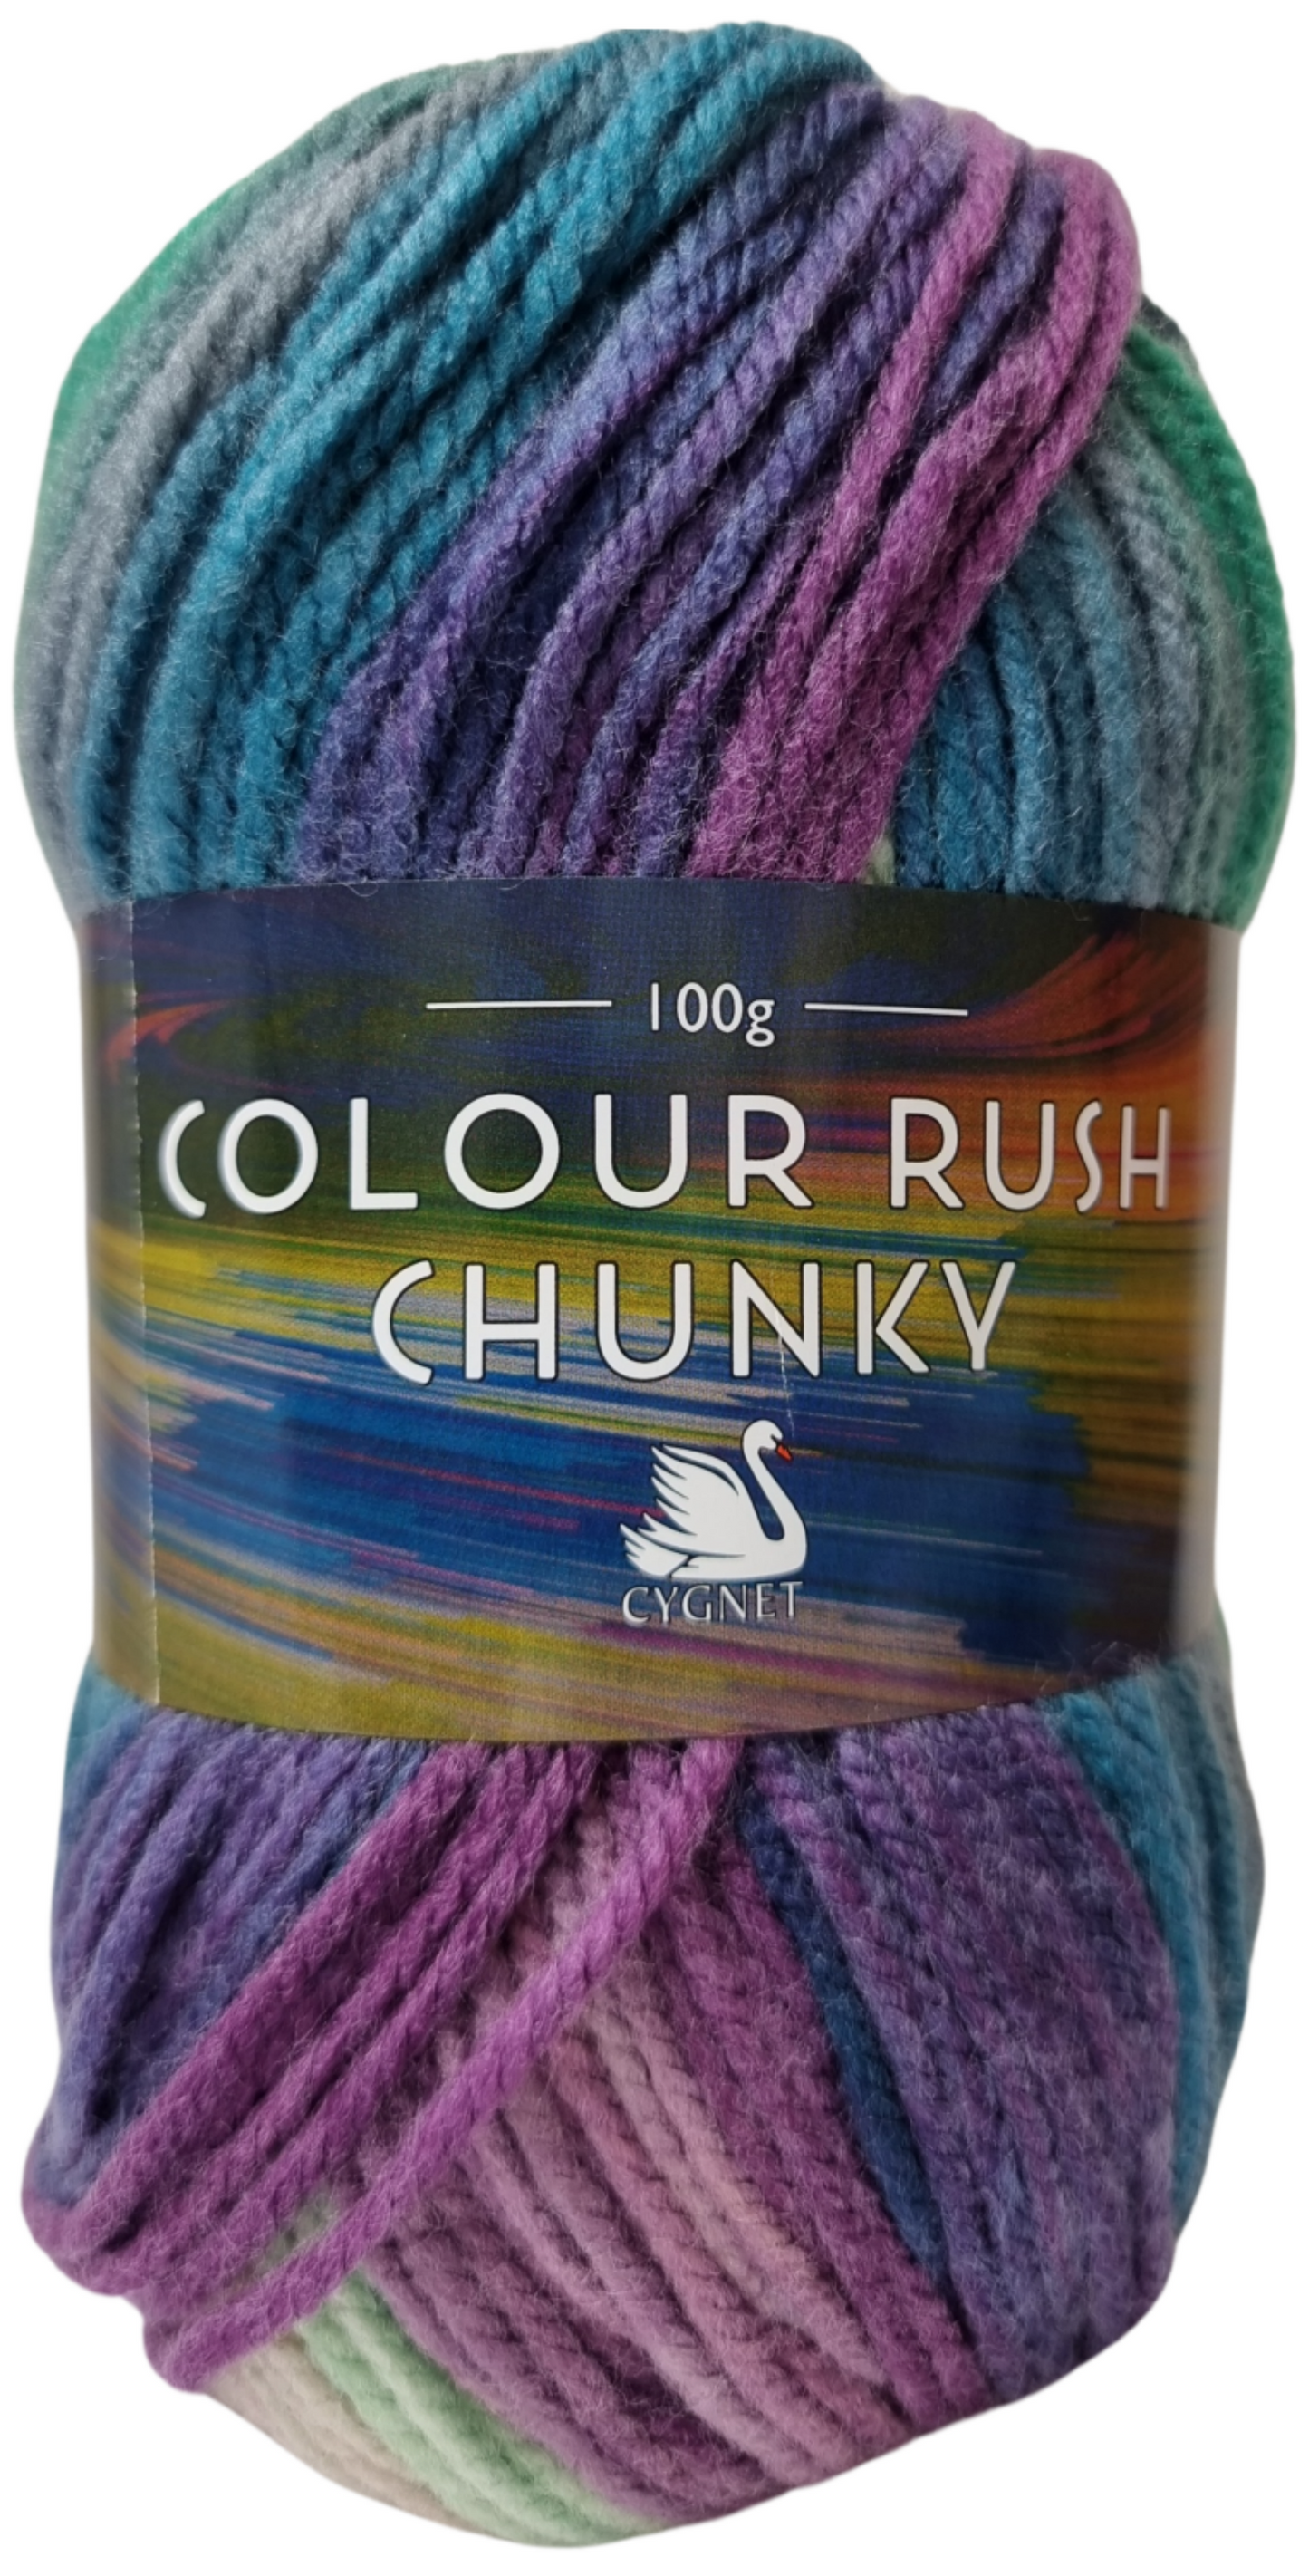 Dutch Tulip - Cygnet Colour Rush Chunky 100g